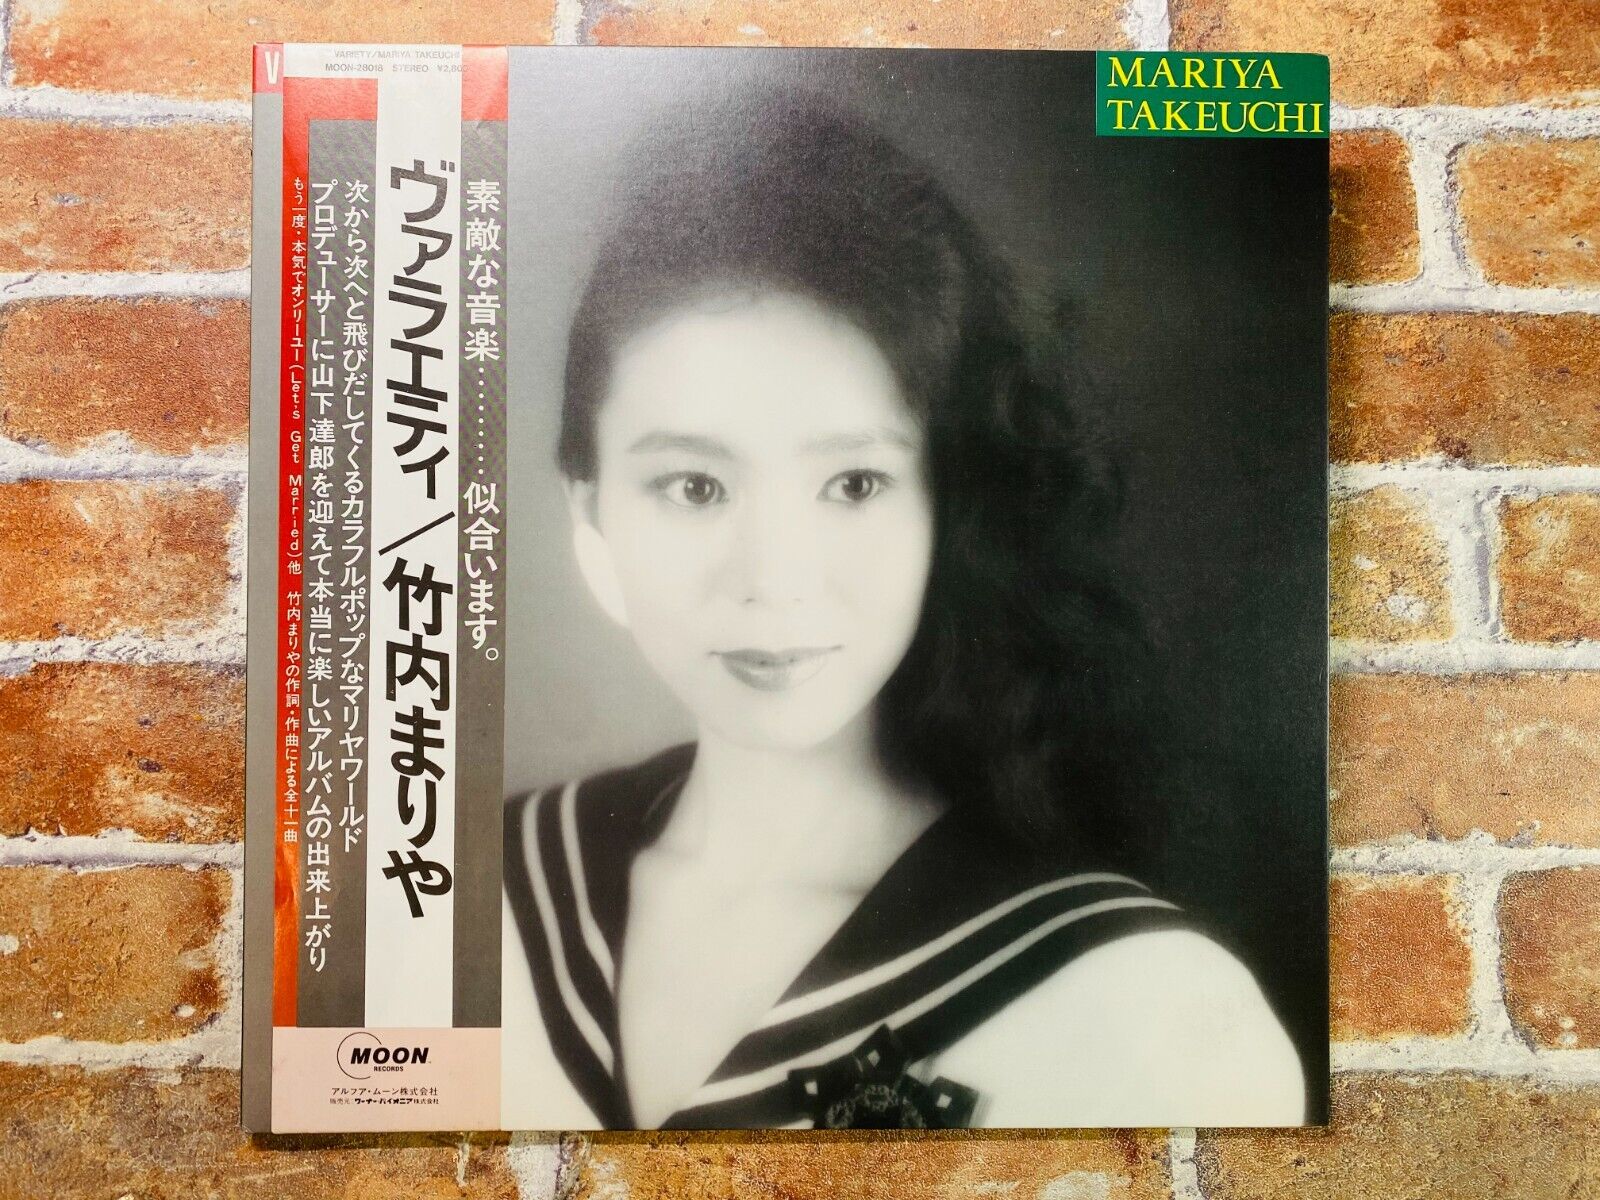 MARIYA TAKEUCHI VARIETY Original Plastic Love w/OBI JAPAN LP Vinyl Record Fast